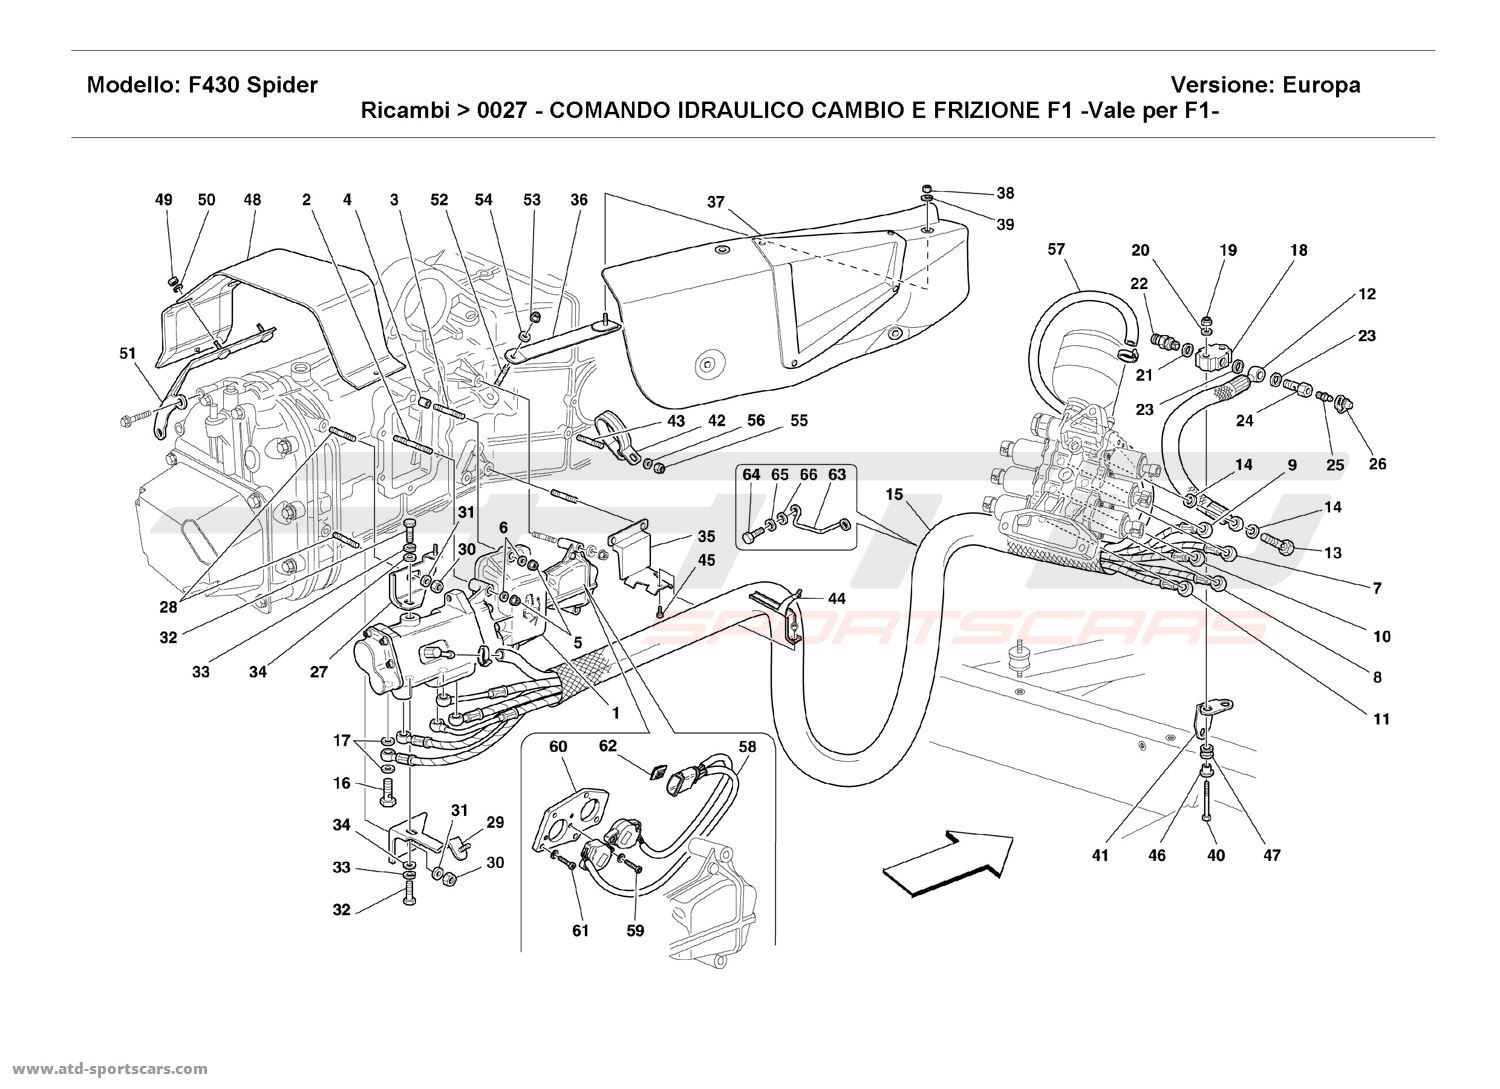 F1 CLUTCH AND GEARBOX HYDRAULIC CONTROL